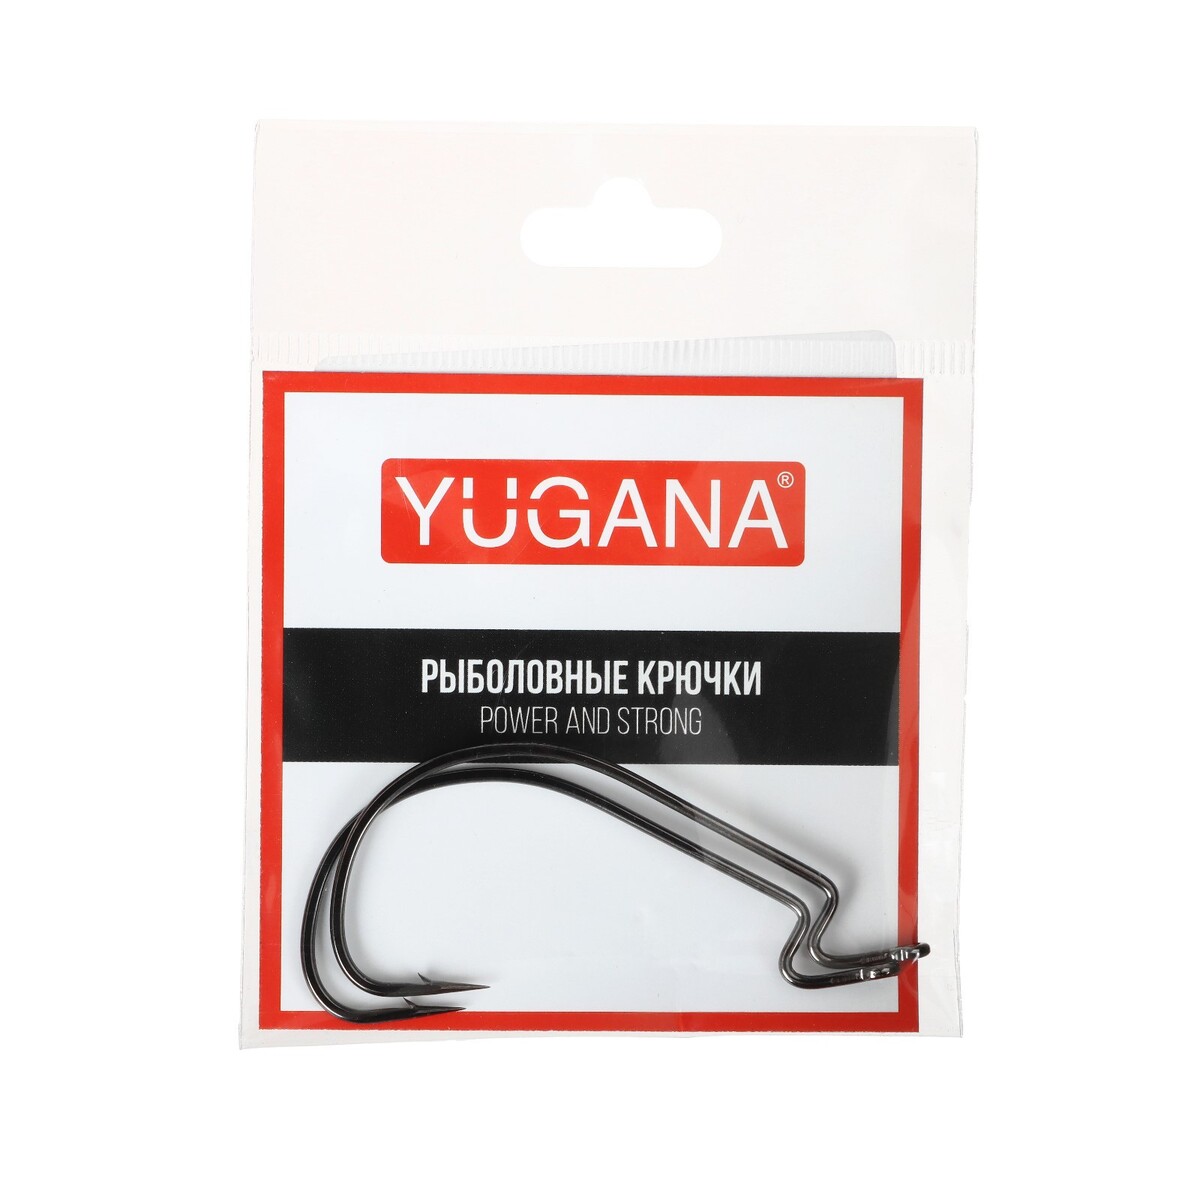   yugana wide range worm,   5/0, 2 